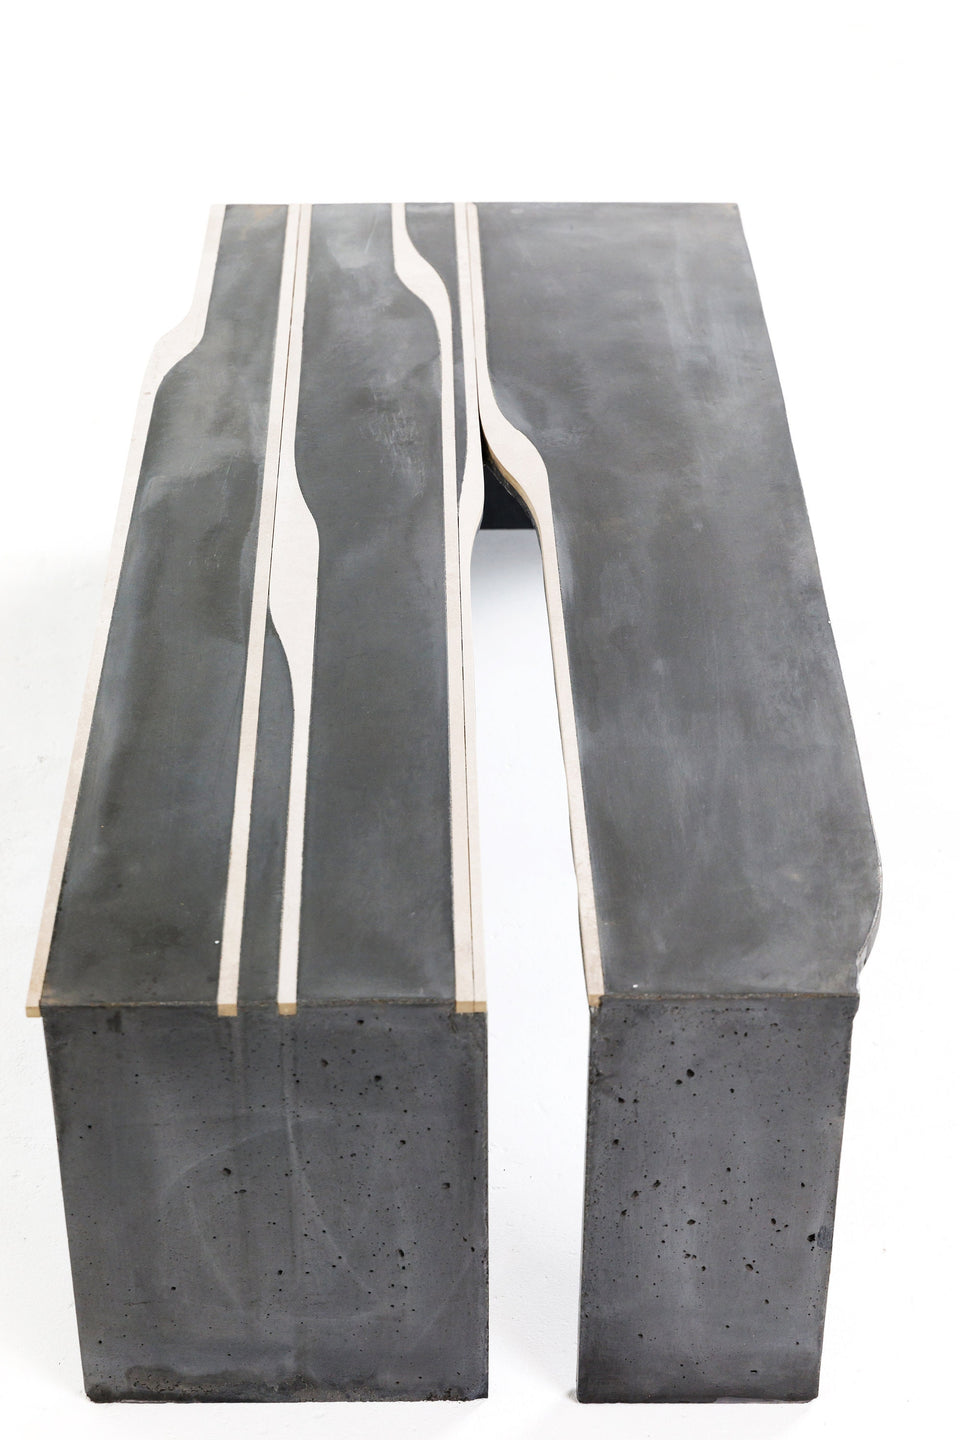 Drip concrete coffee table